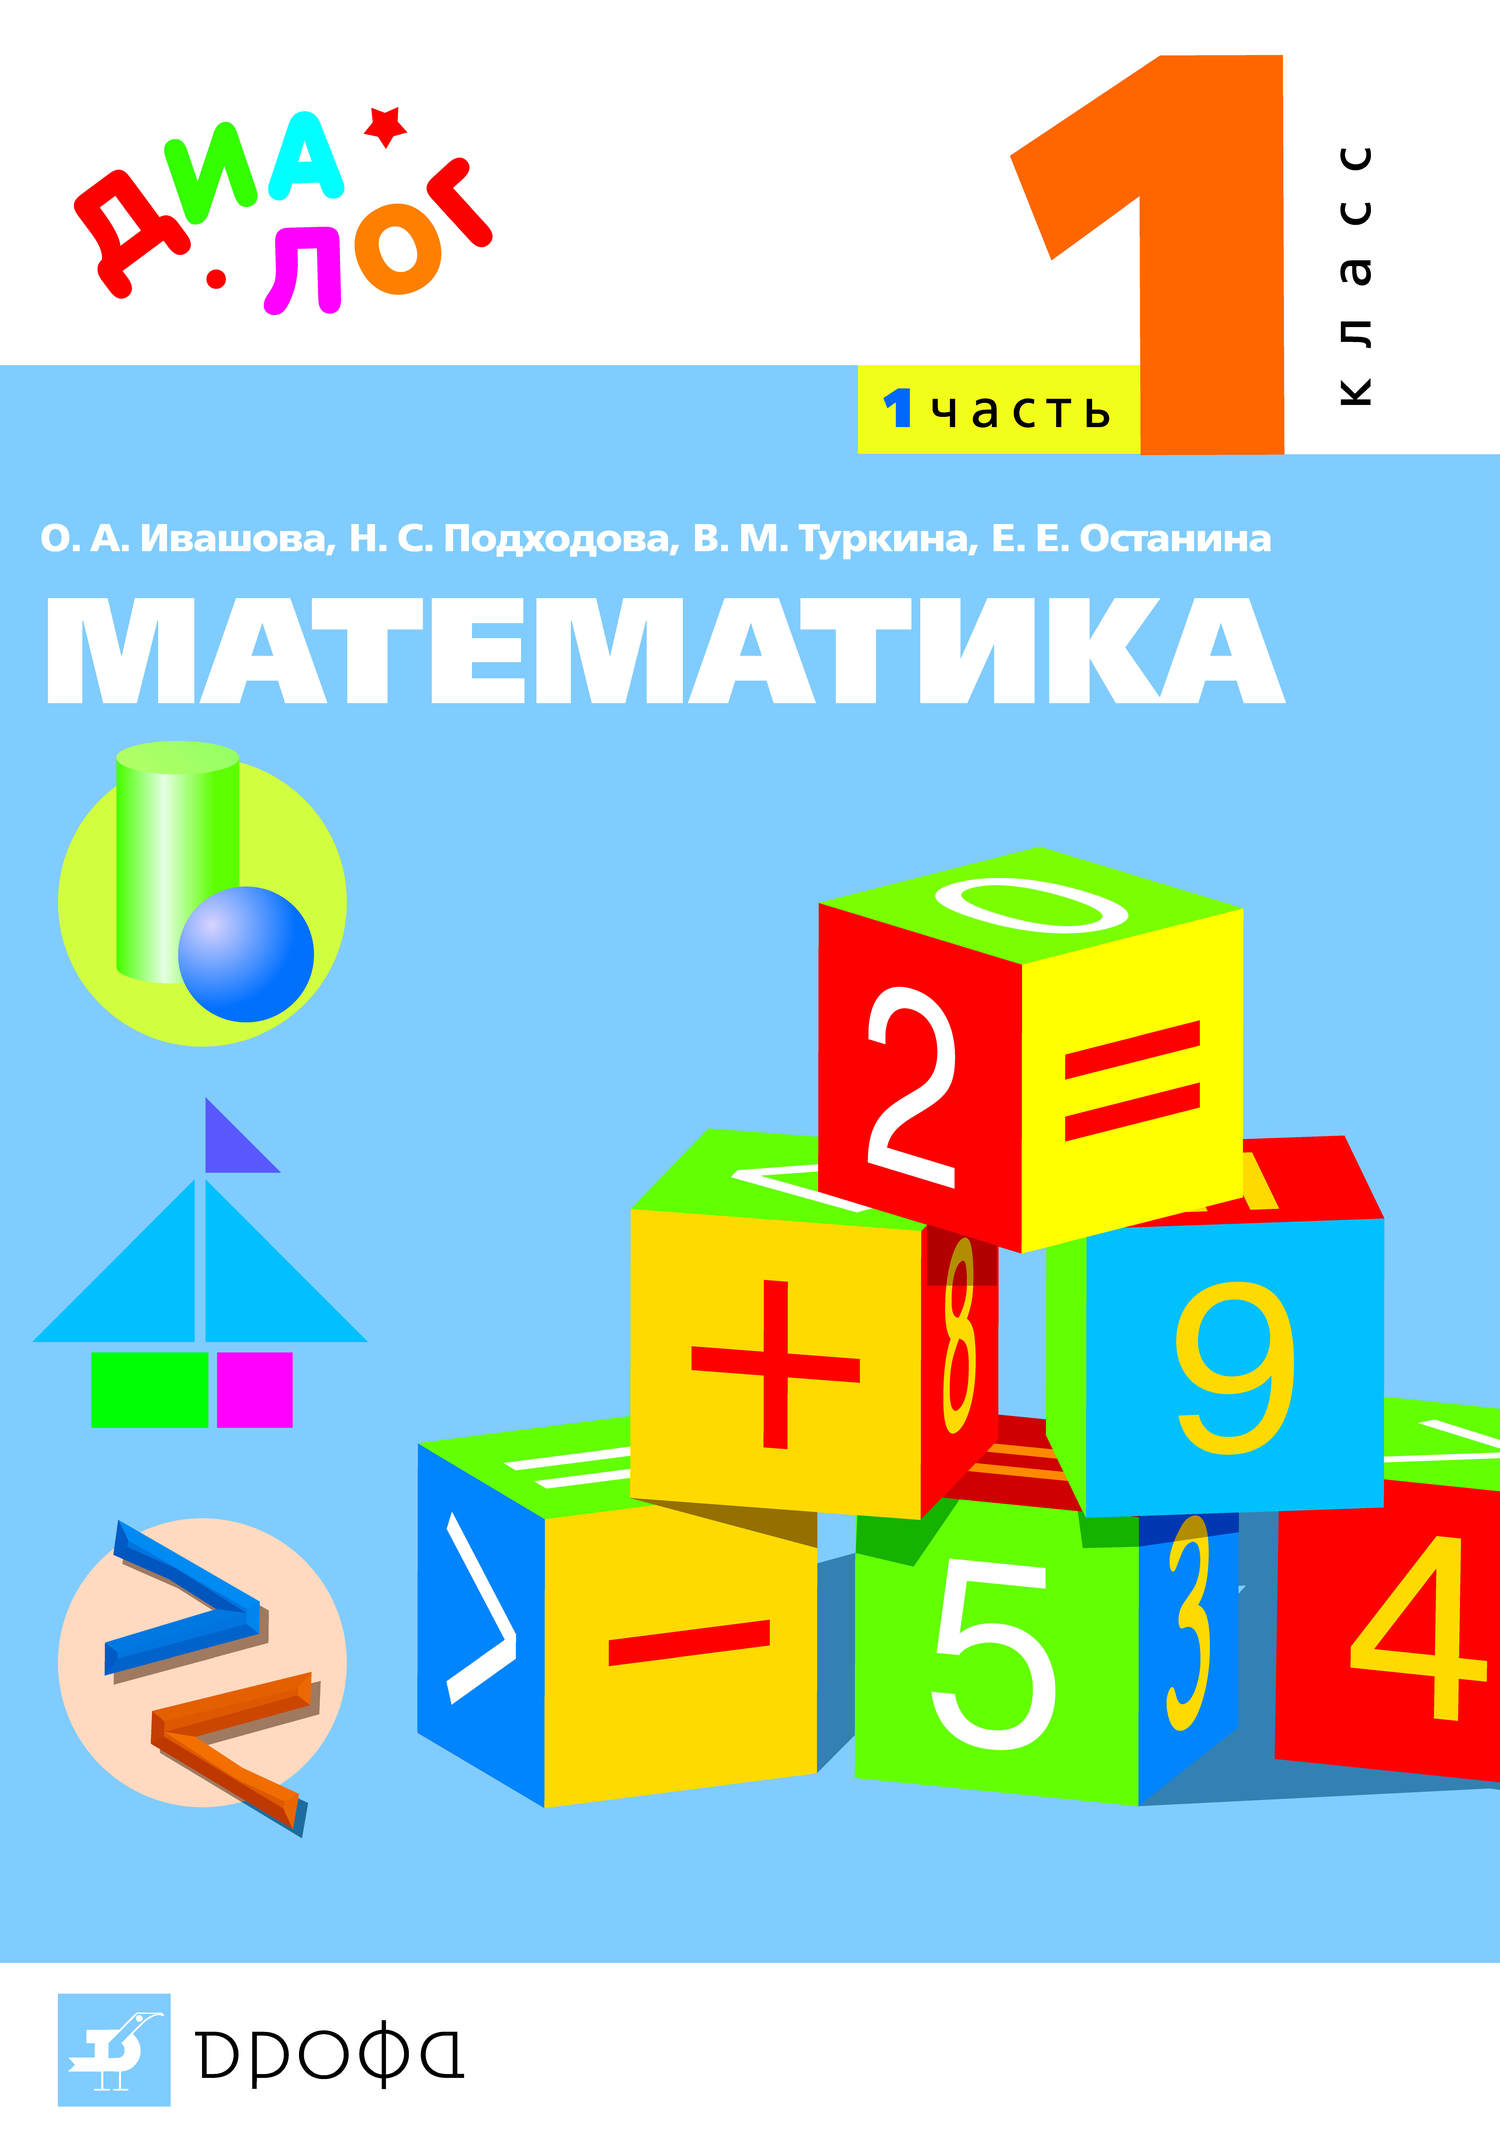 Матиматика учебник. Учебник математики. Книга математика. Учебник математики 1 класс. Книга математика 1 класс.